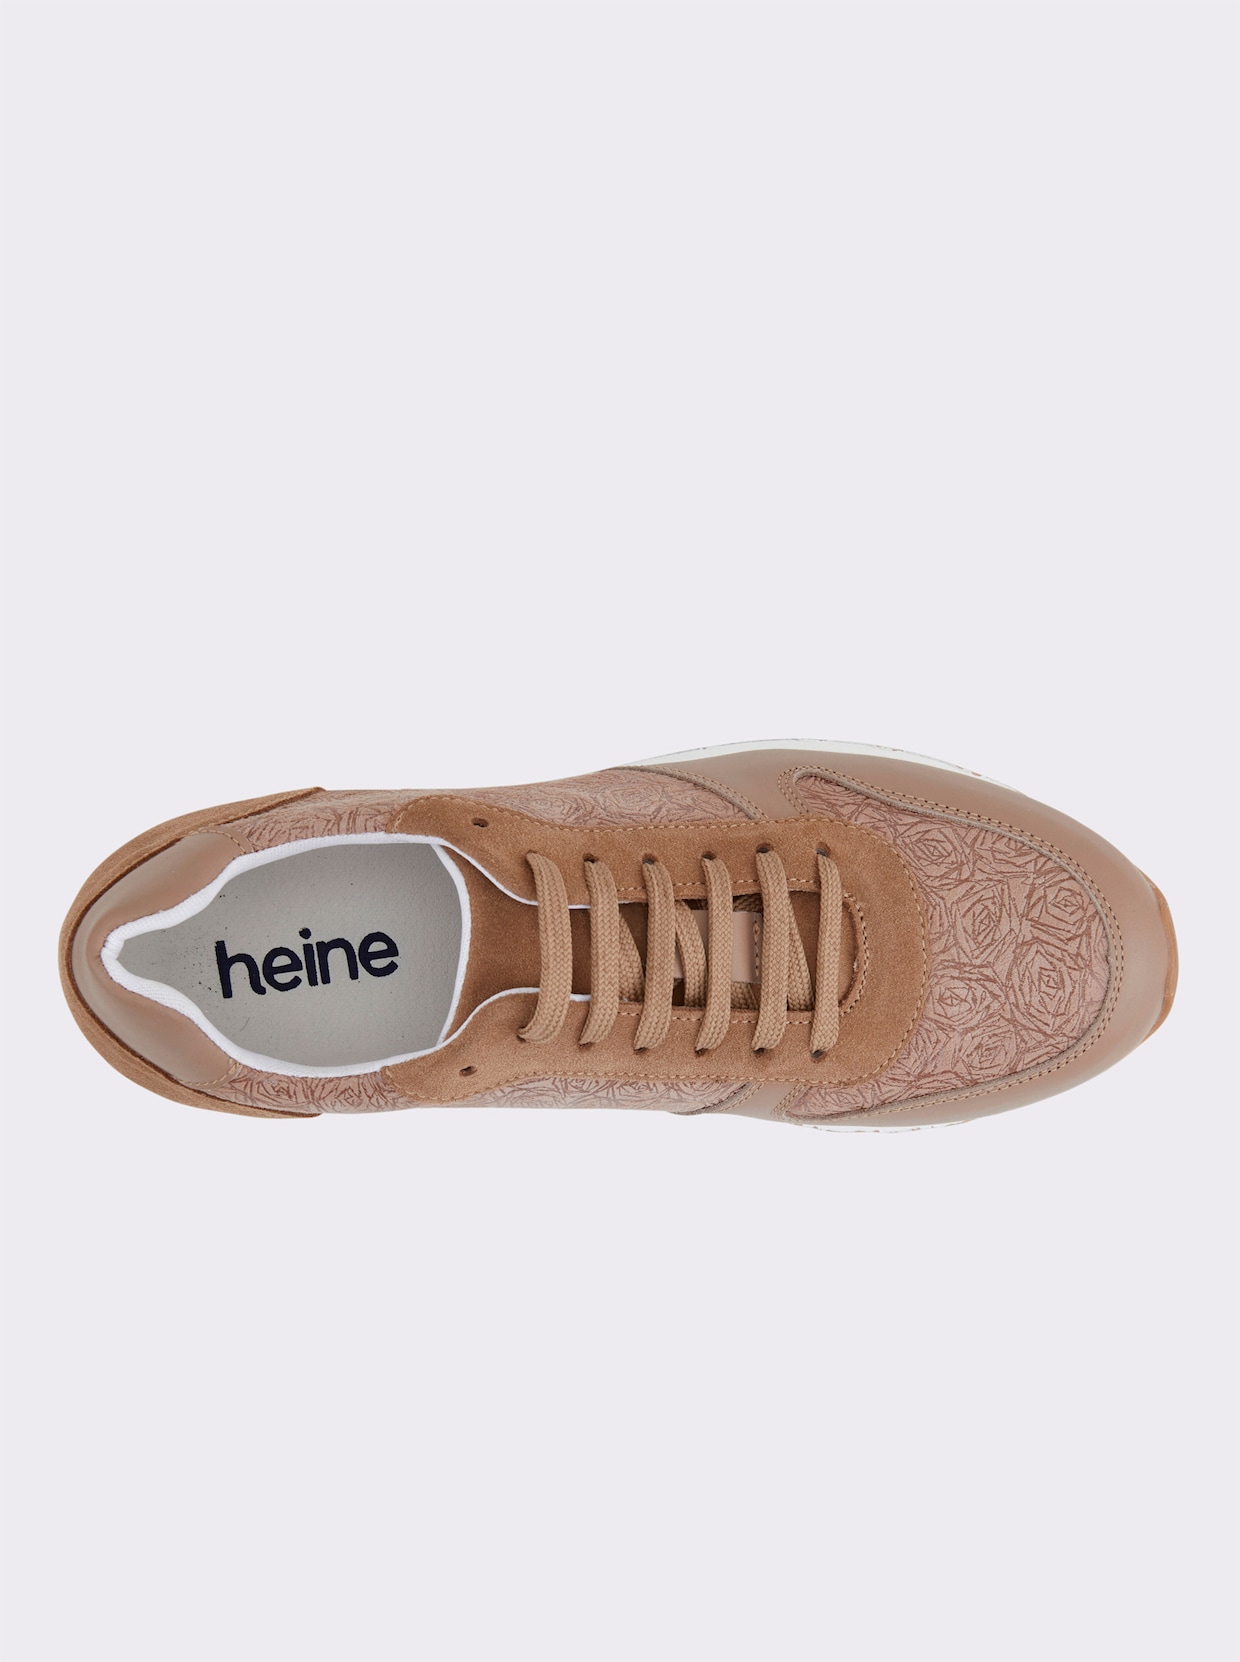 heine Sneaker - taupe